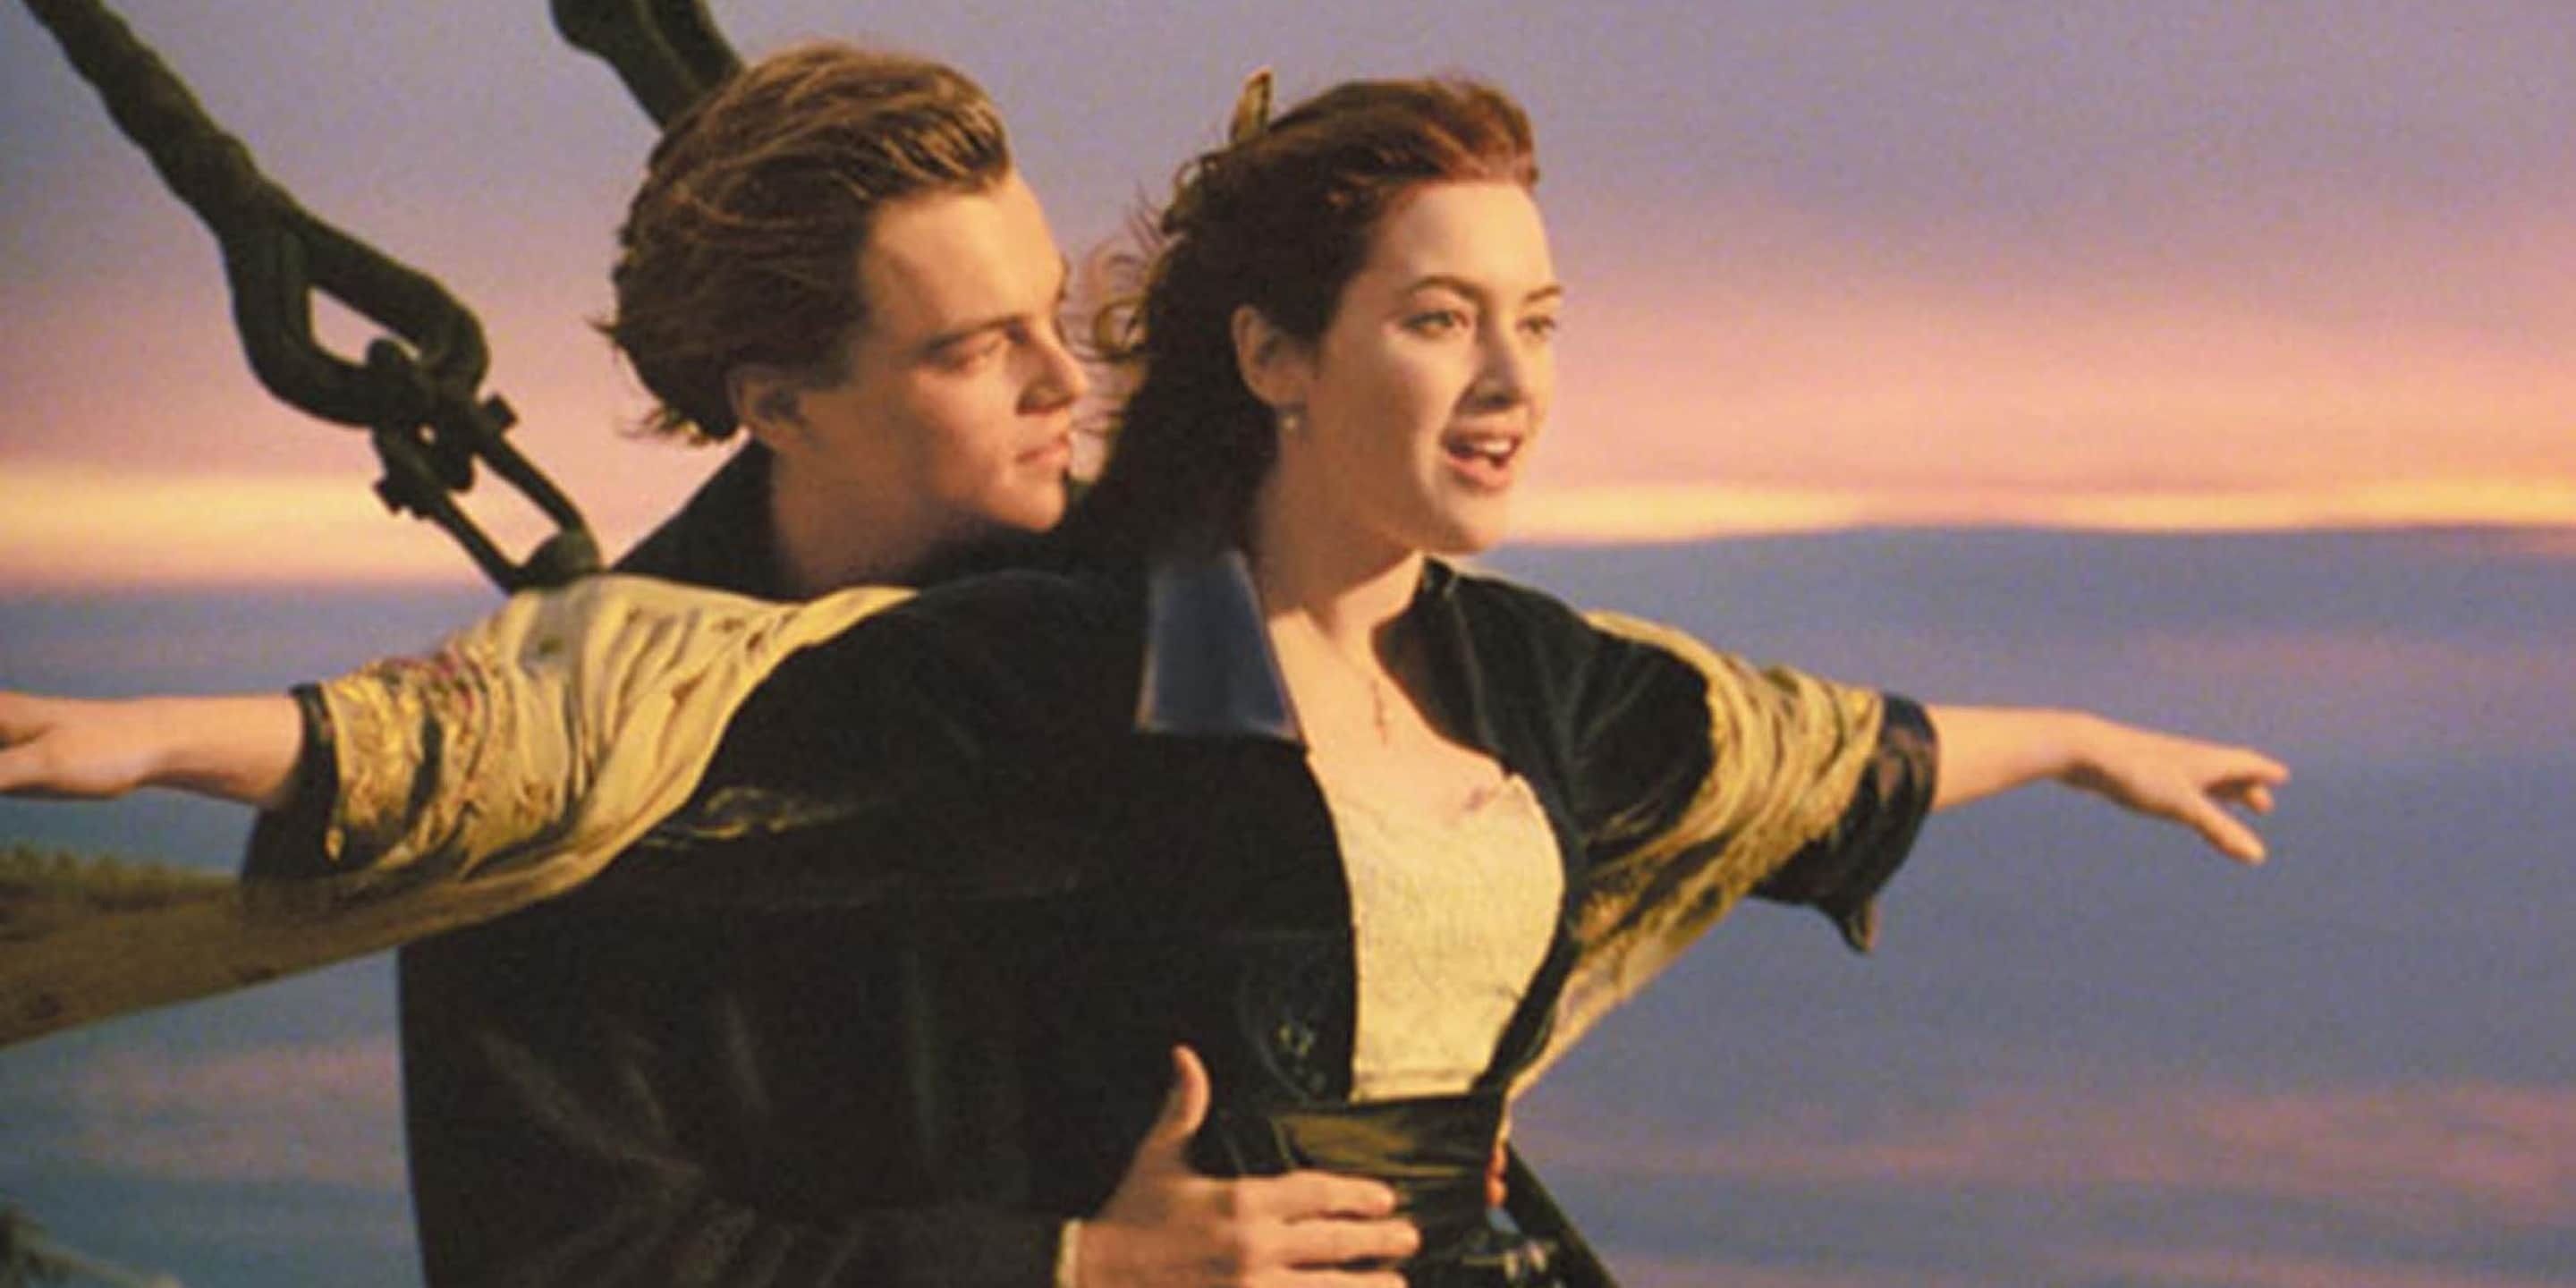 10 Most Impressive CGI Scenes In 90s Movies Ranked